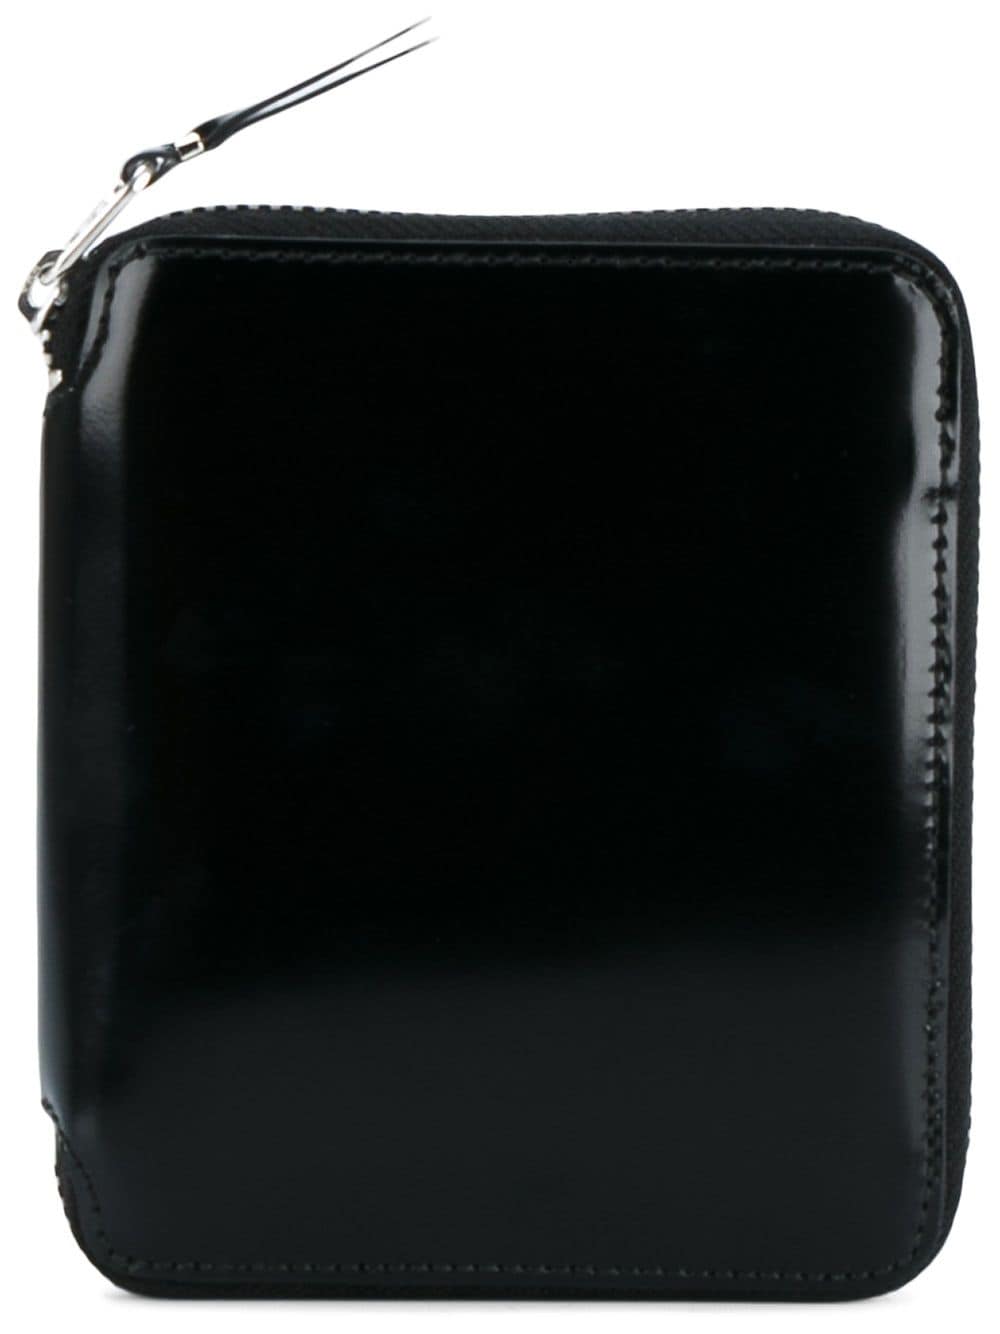 Black leather zip around wallet